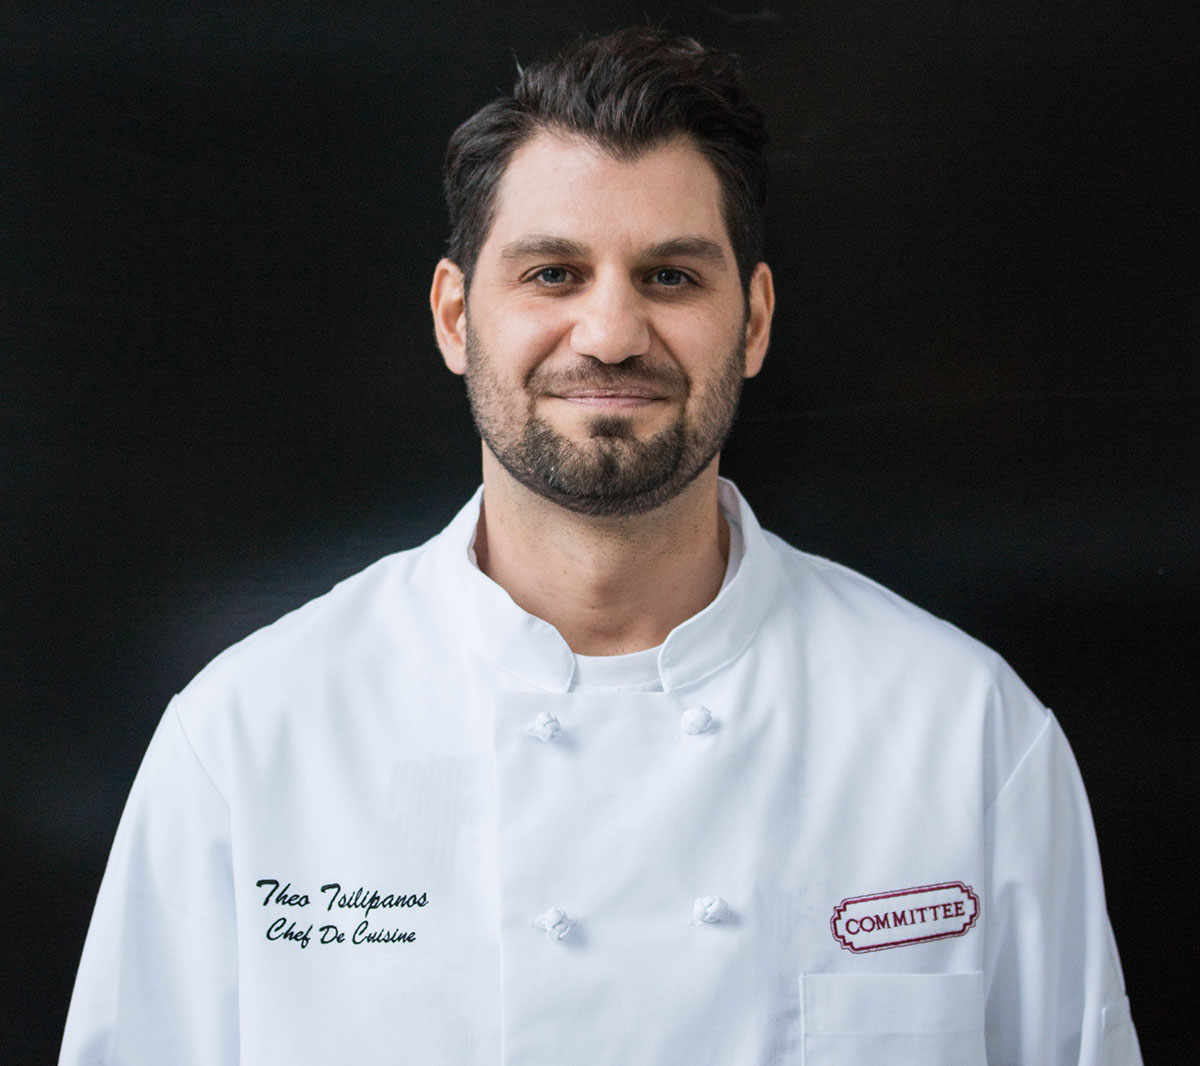 Committee chef de cuisine Theo Tsilipanos